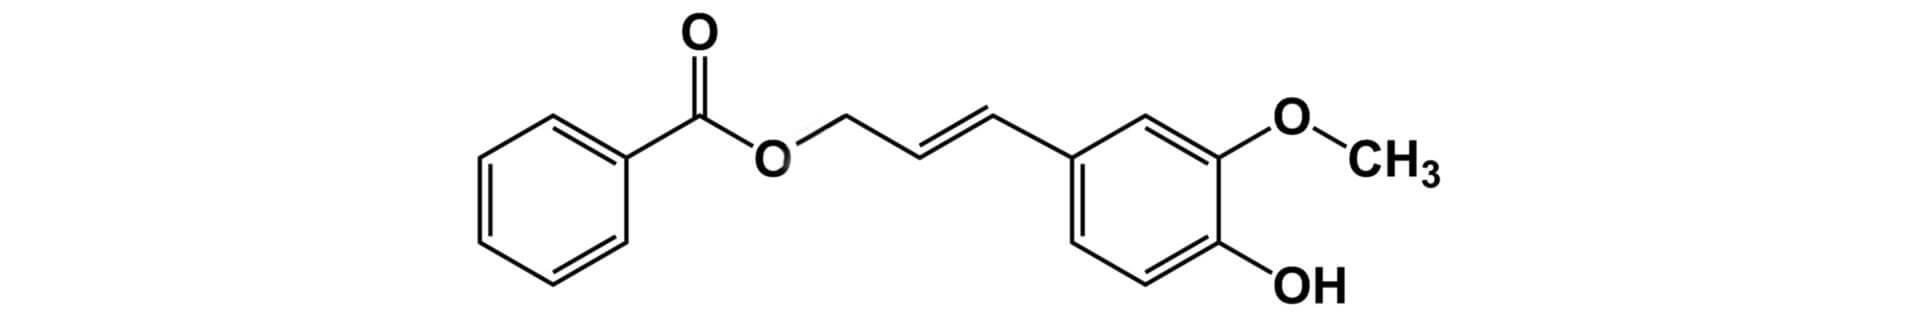 Coniferylbenzoat